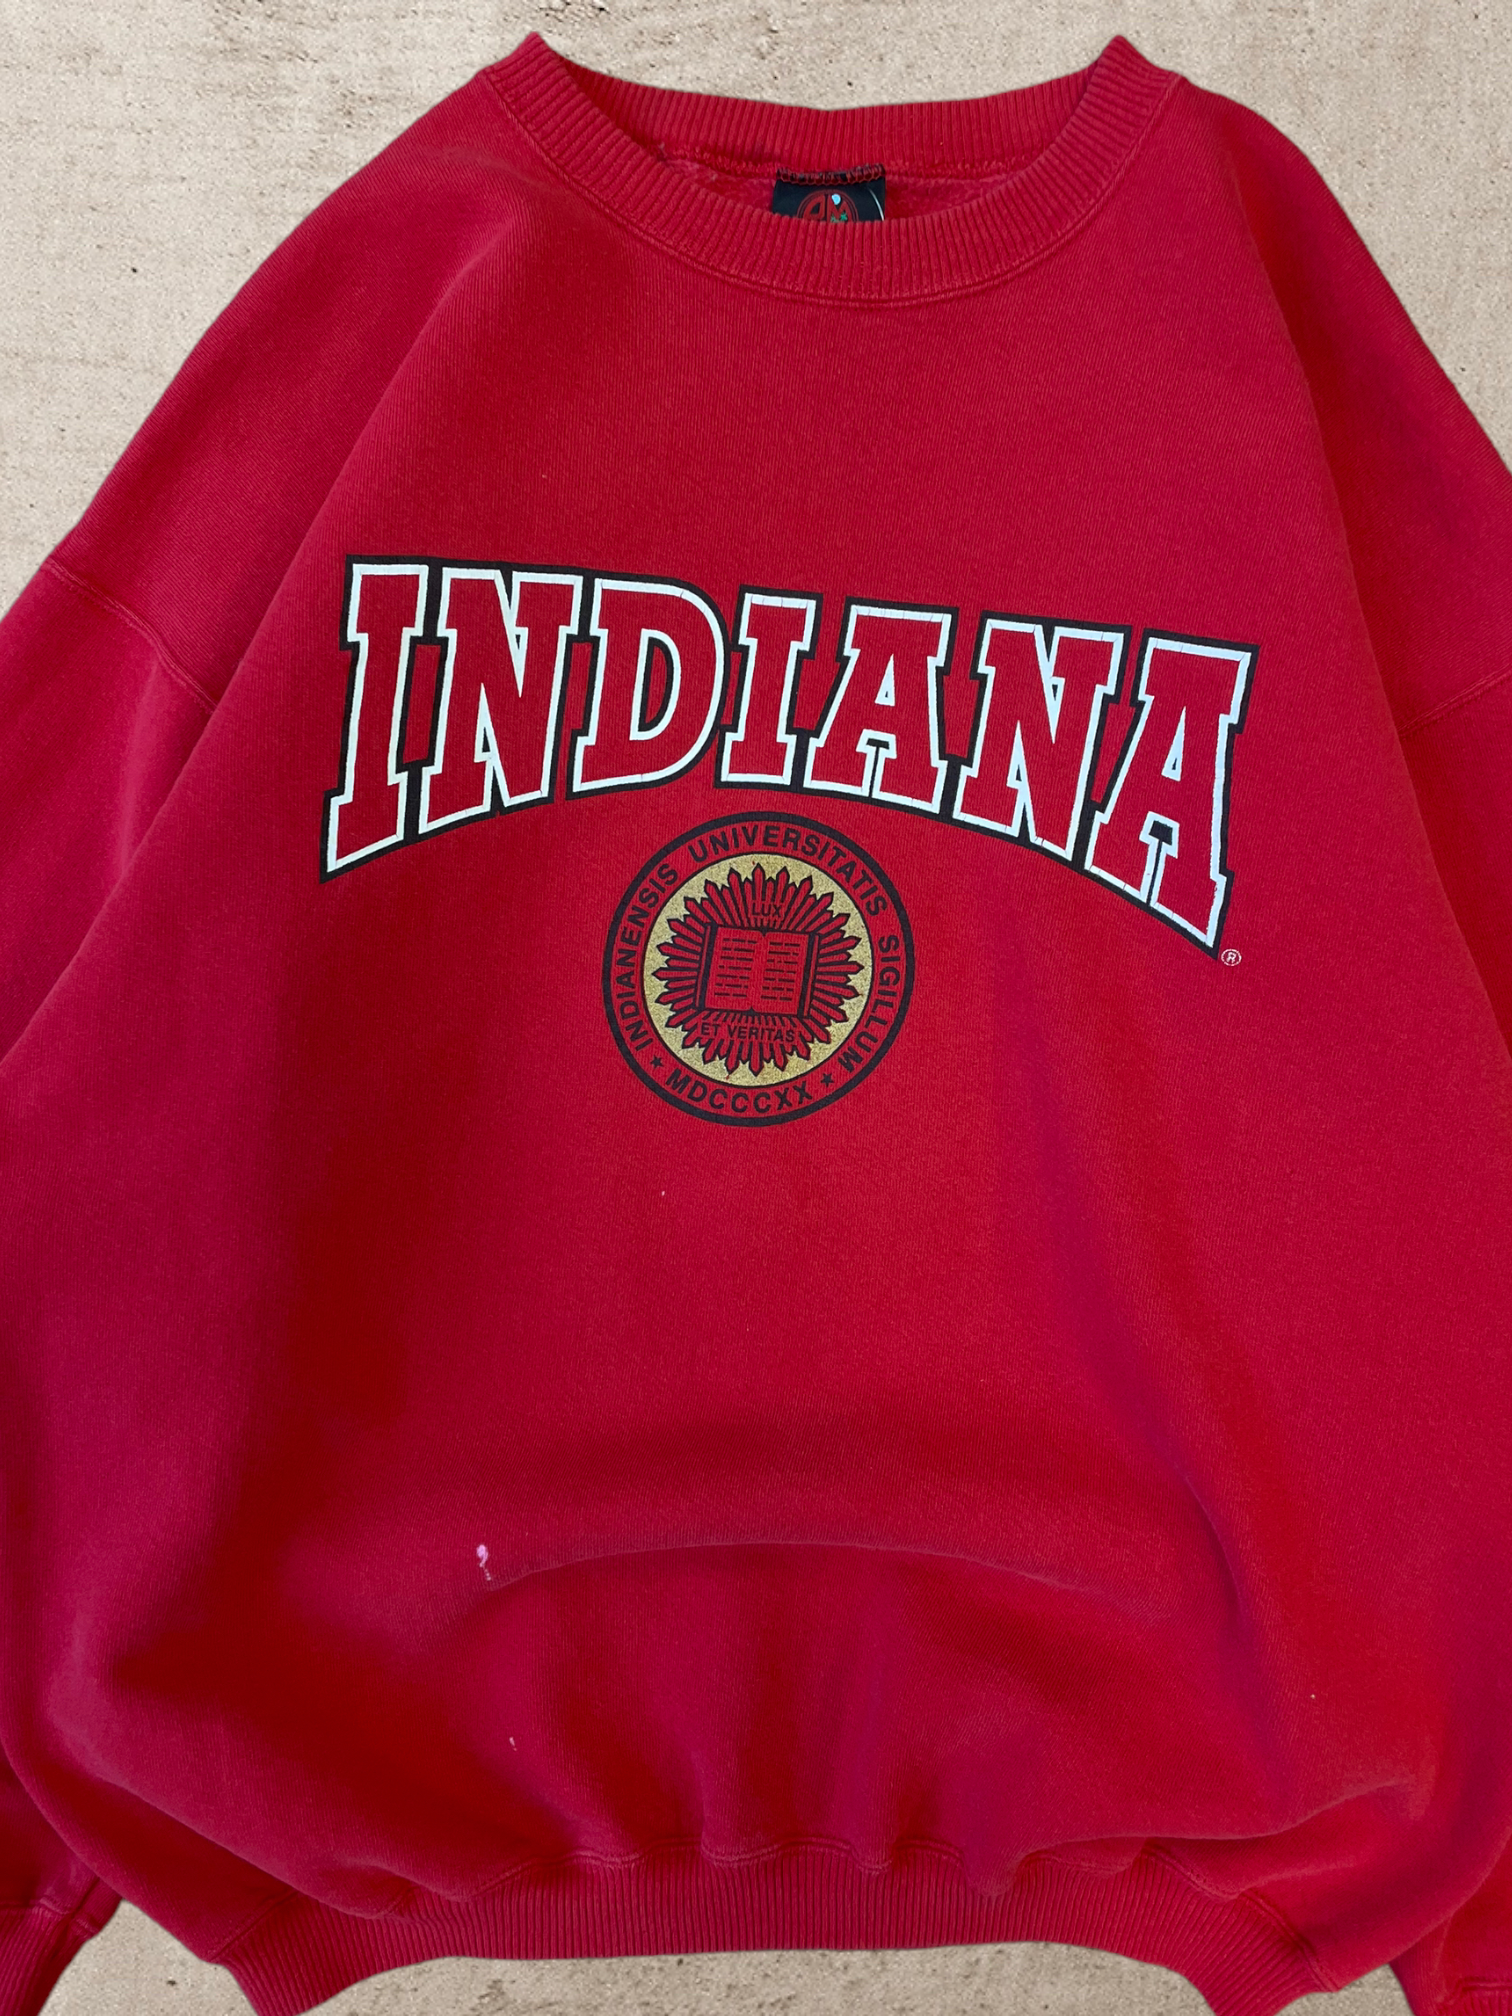 90s Indiana University Crewneck - XL